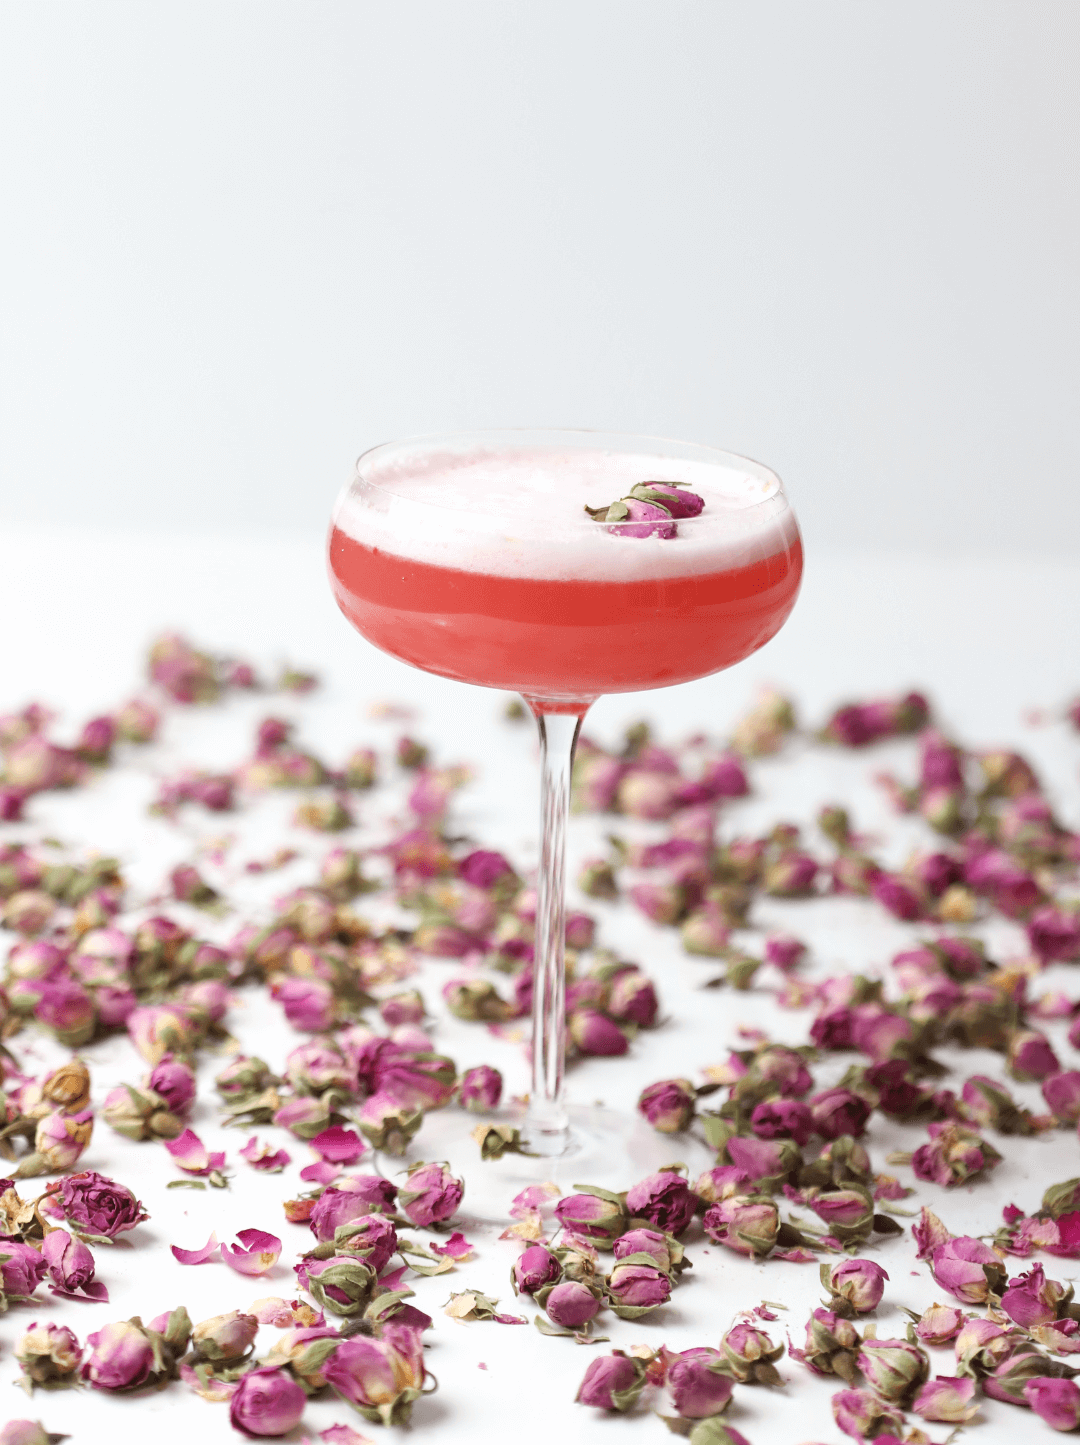 Cóctel de Rosas o Clover Cocktail sobre una mesa repleta de capullos de rosas.